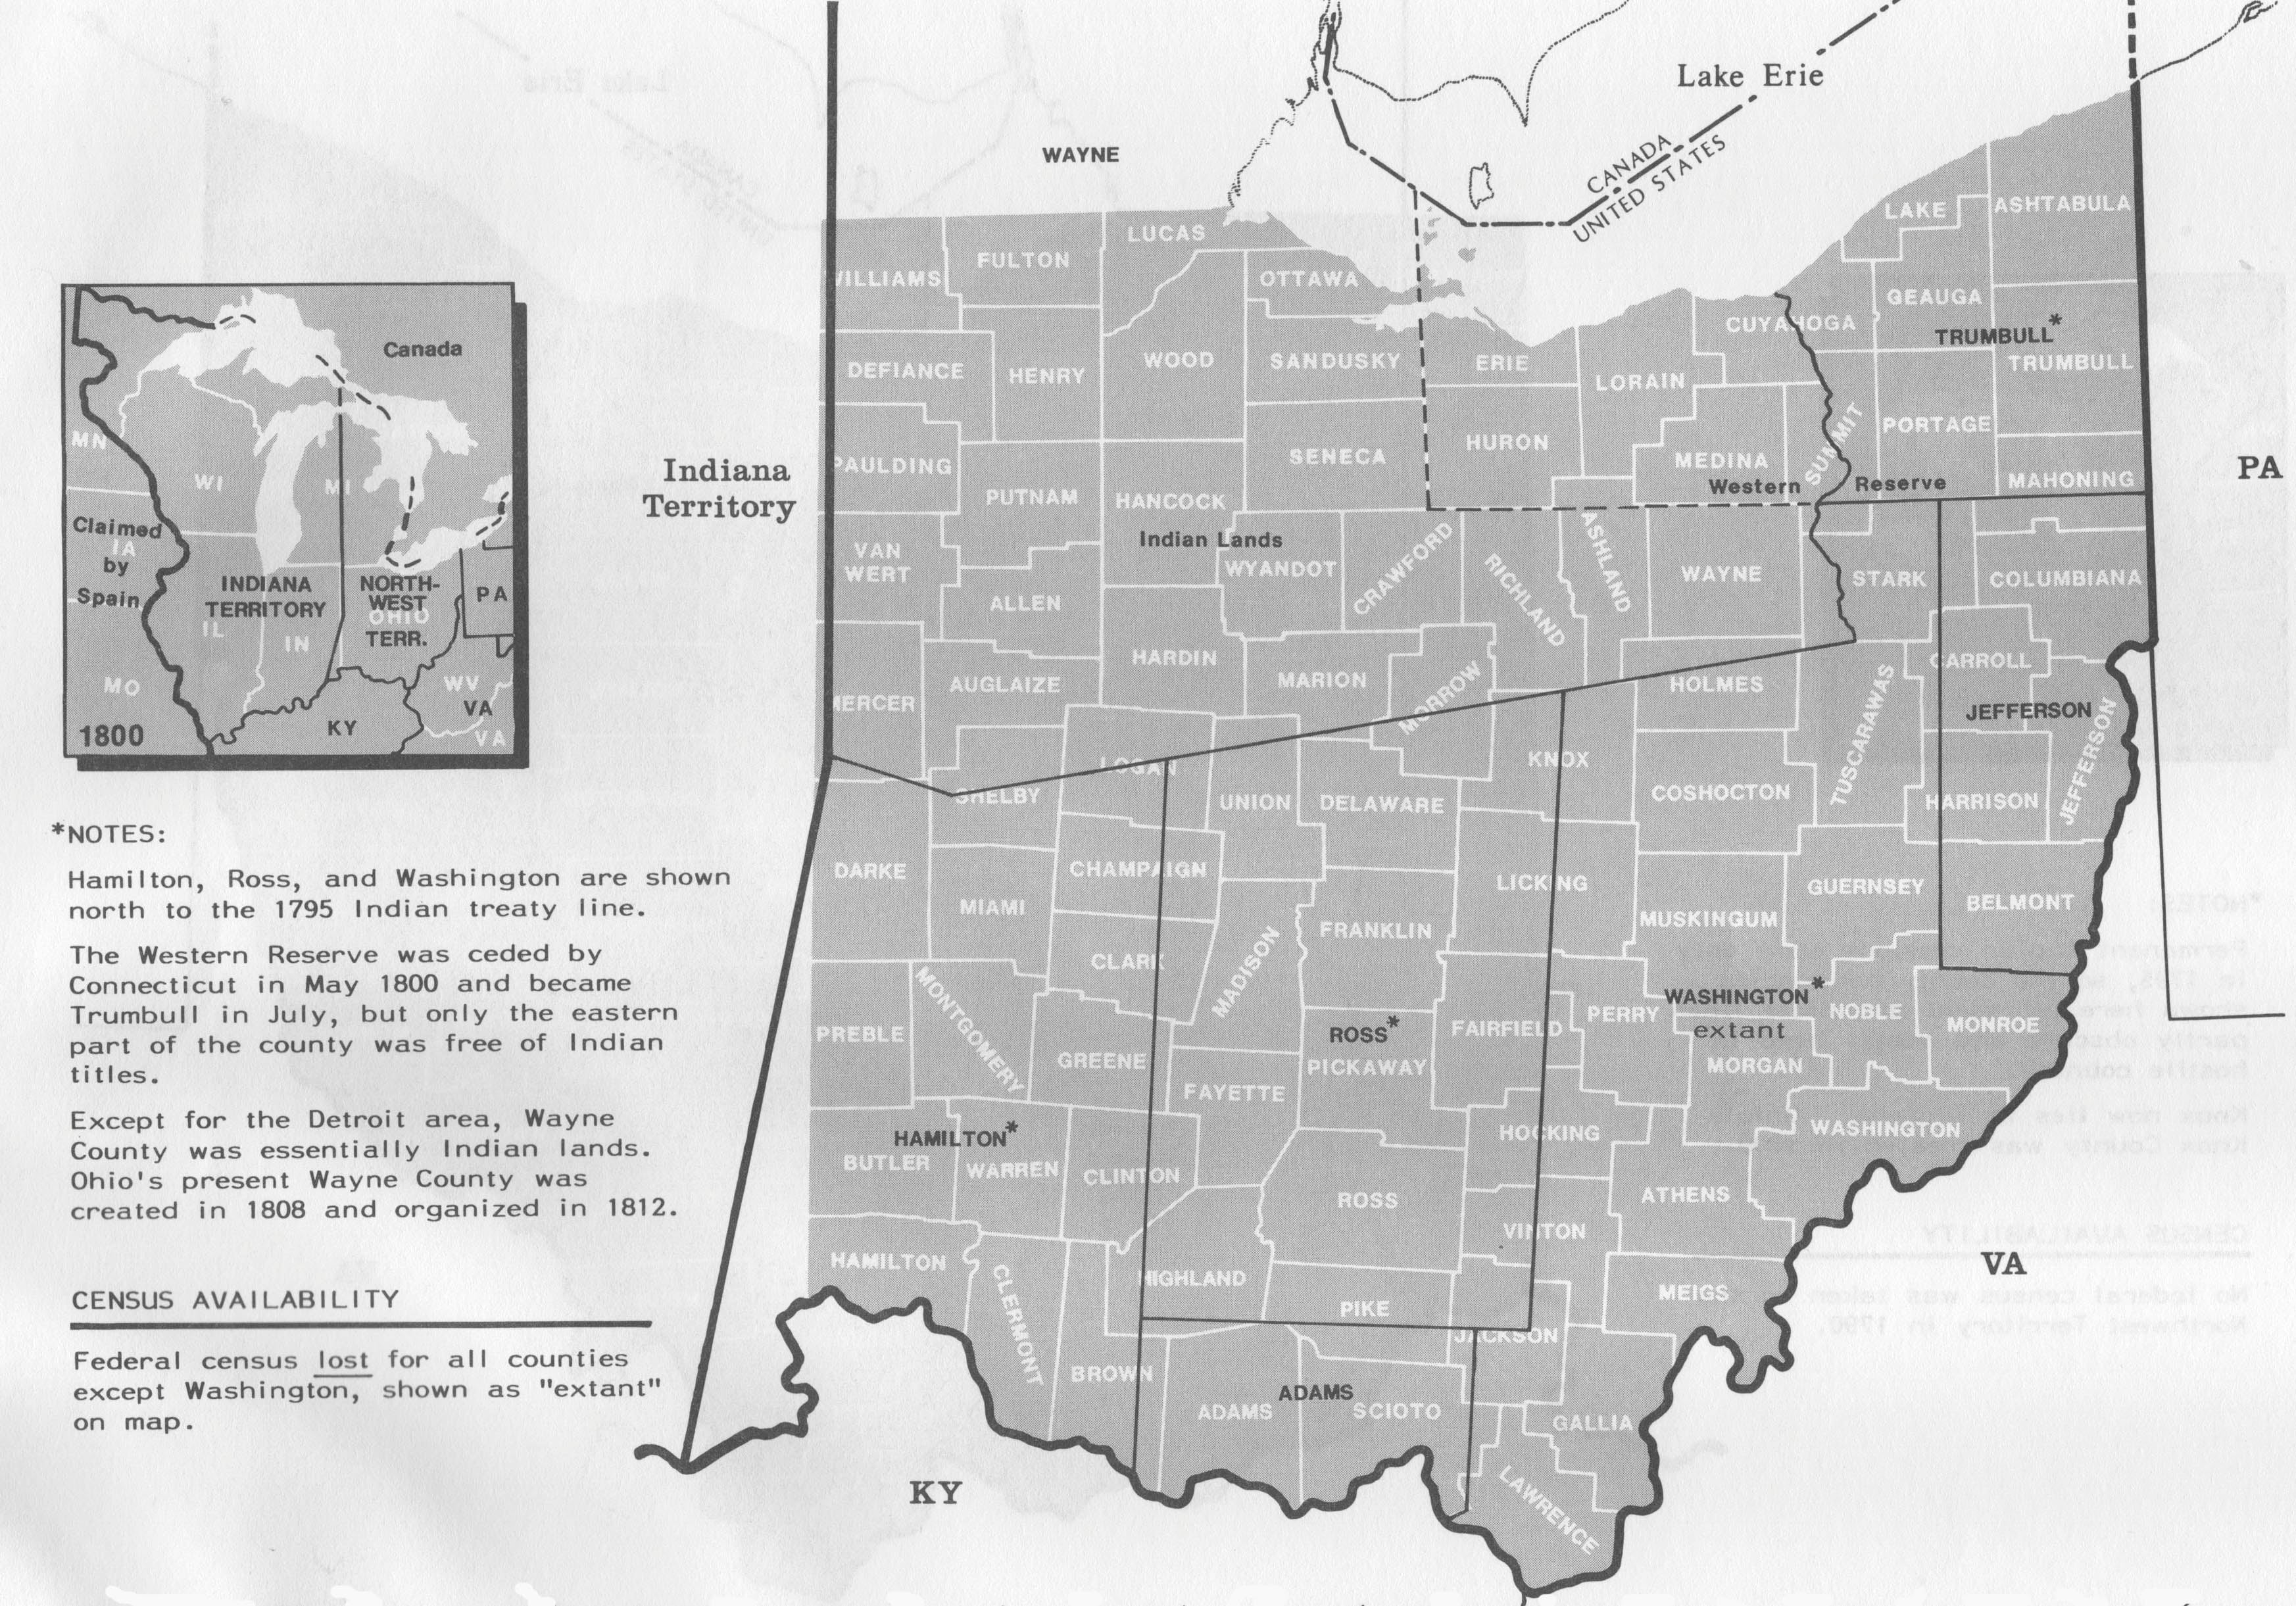 Ohio Censuses & Substitute Name Lists 1787-2013 - PDF eBook